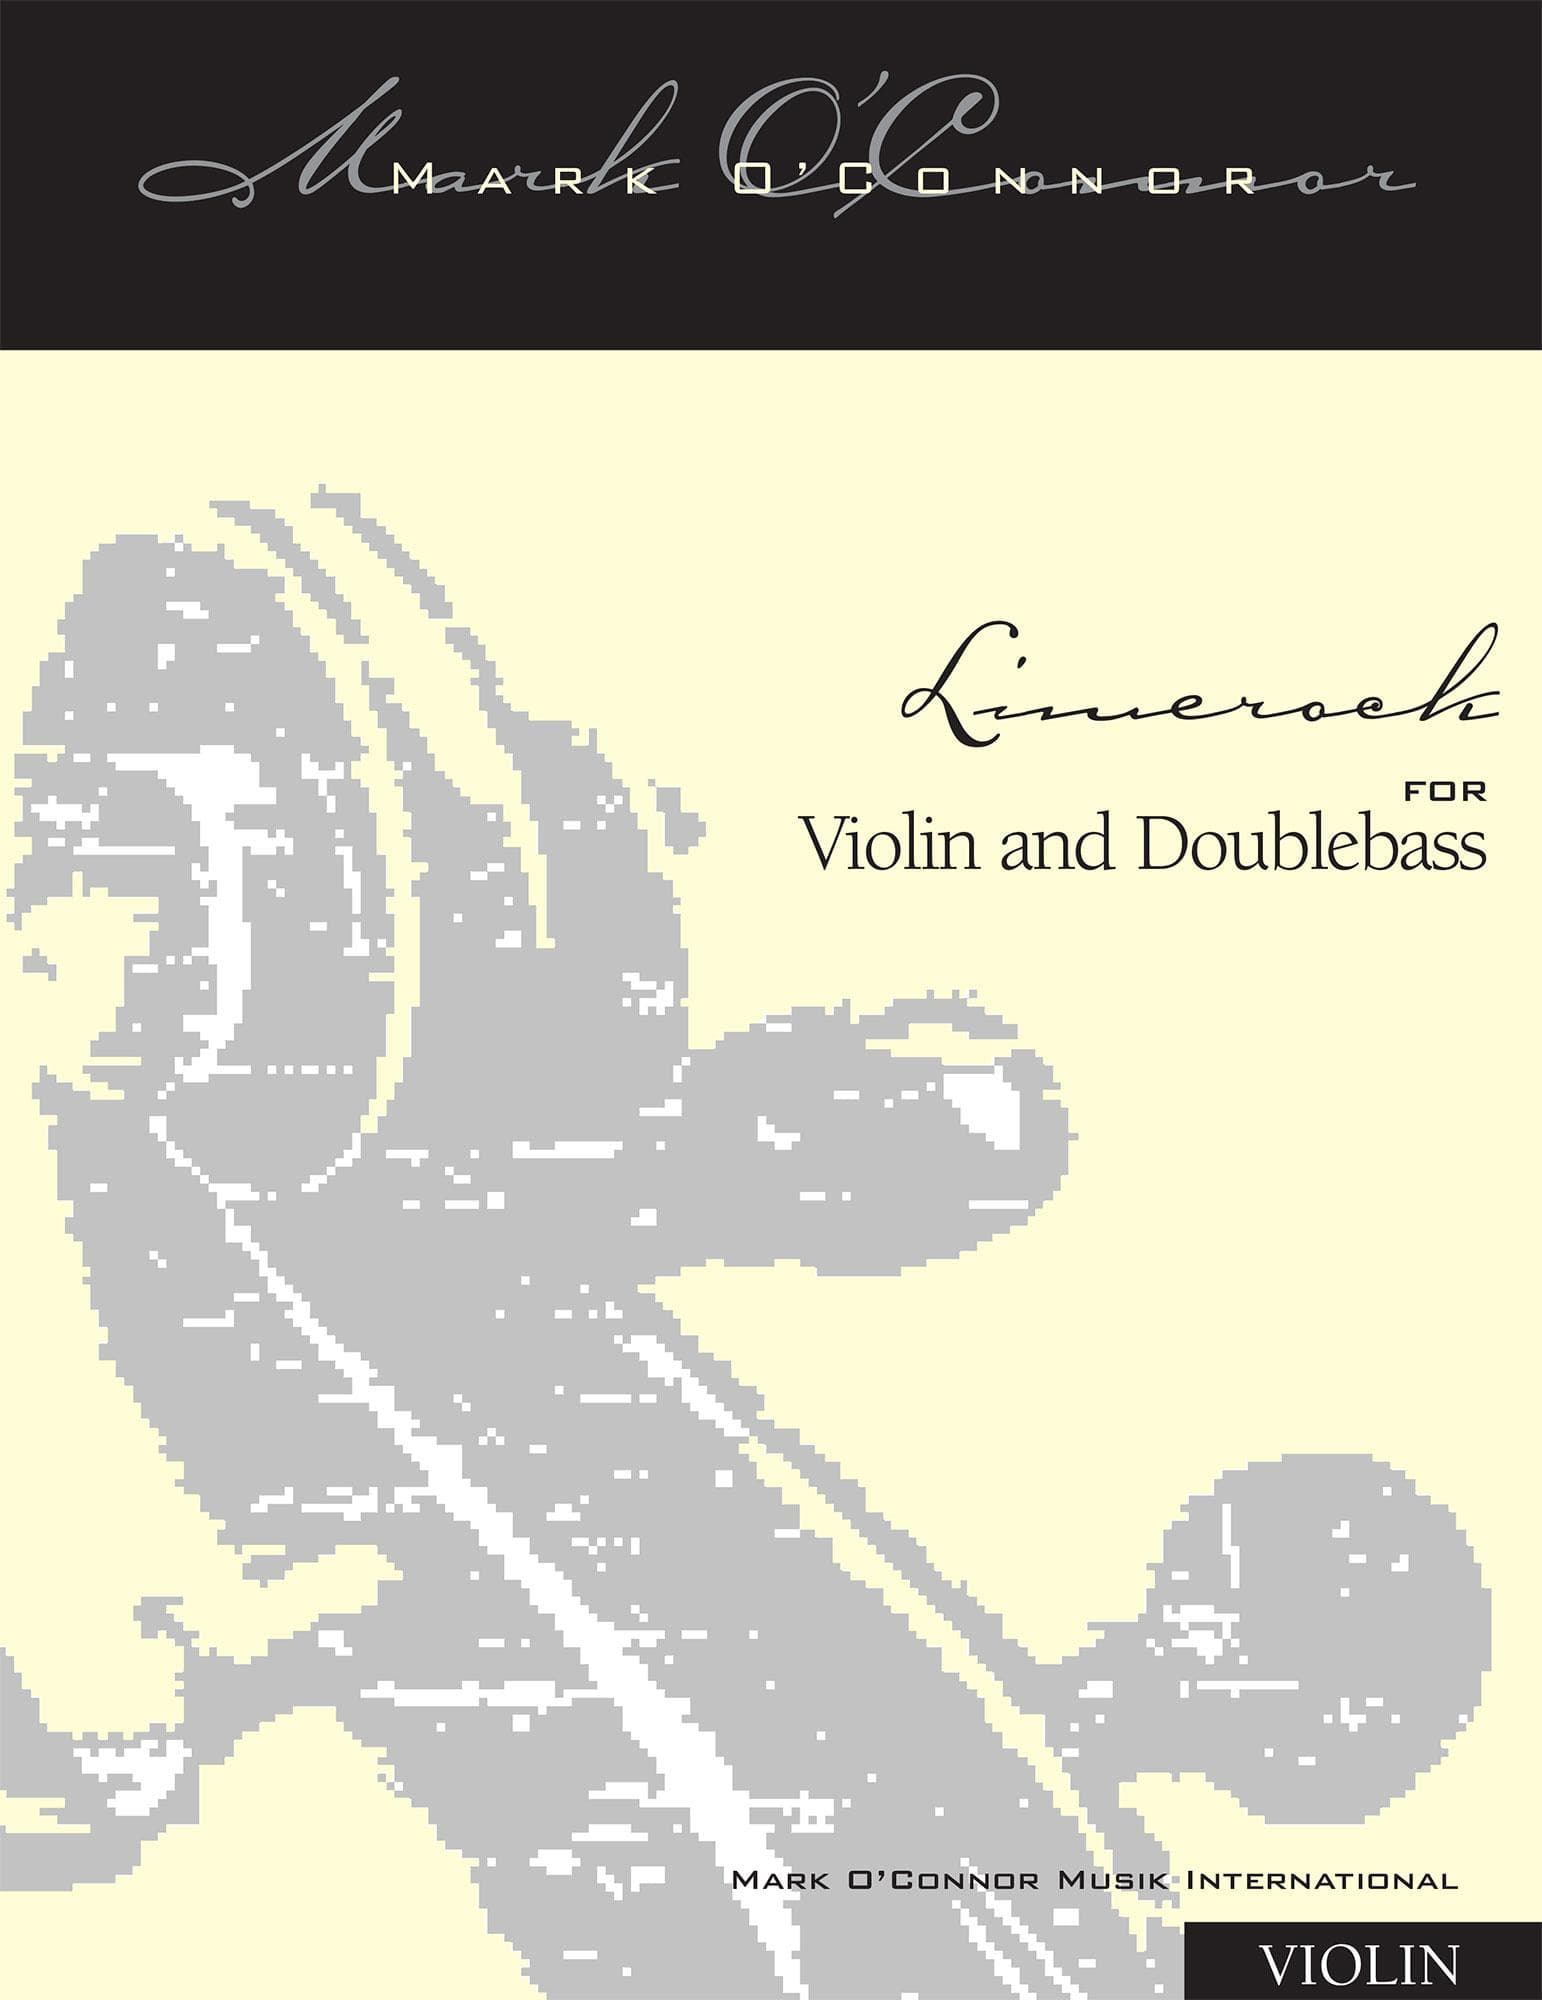 O'Connor, Mark - Limerock for Violin and Bass - Violin - Digital Download